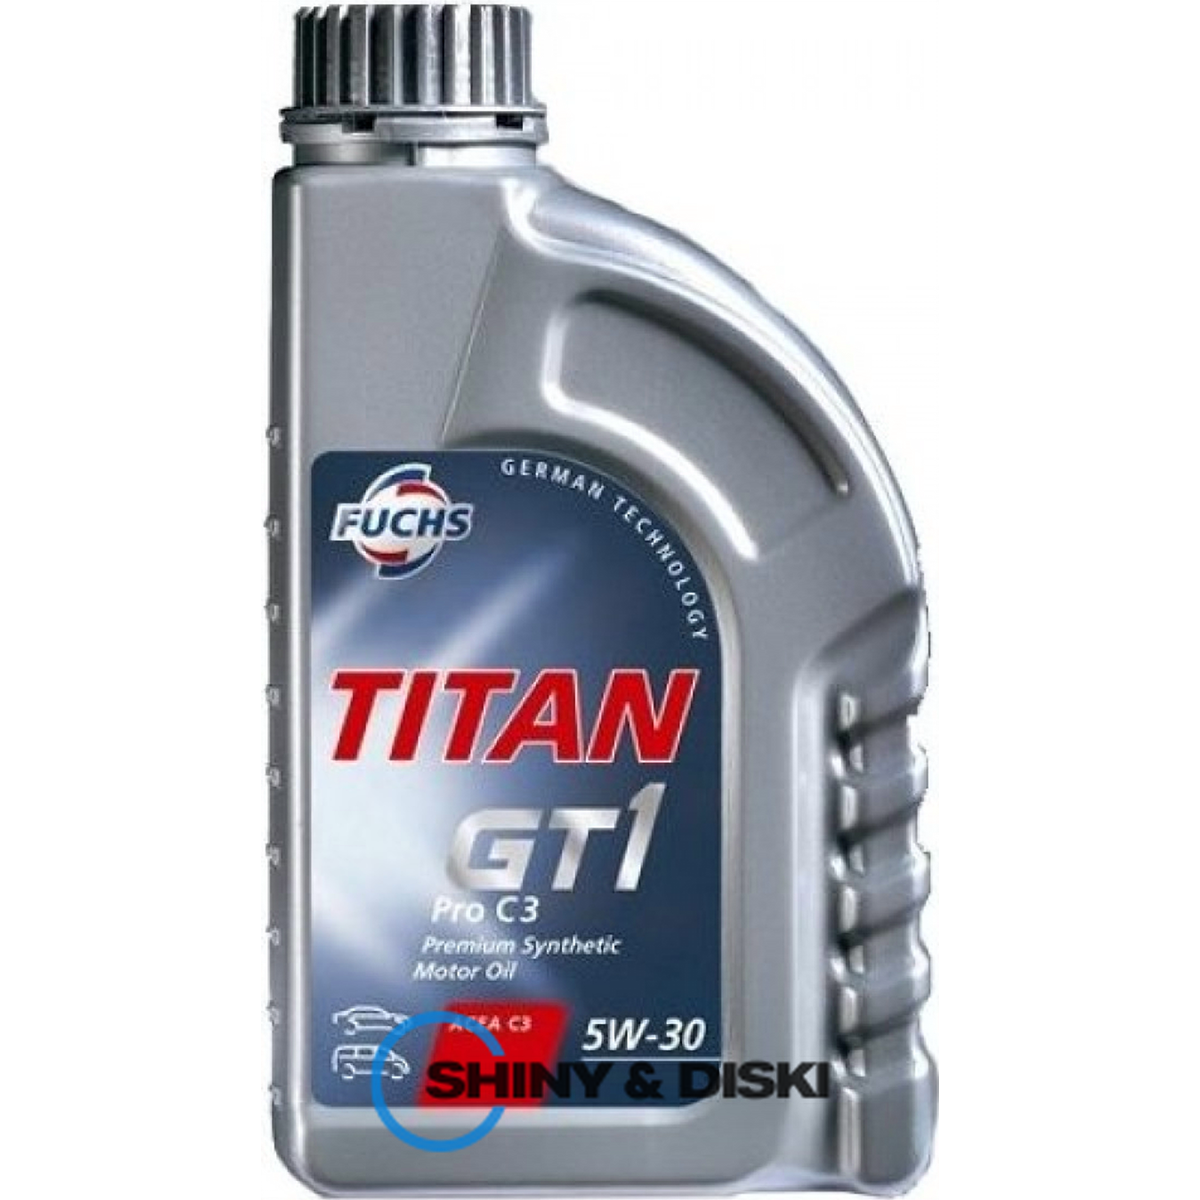 fuchs titan gt1 pro c-3 5w-30 (1л)